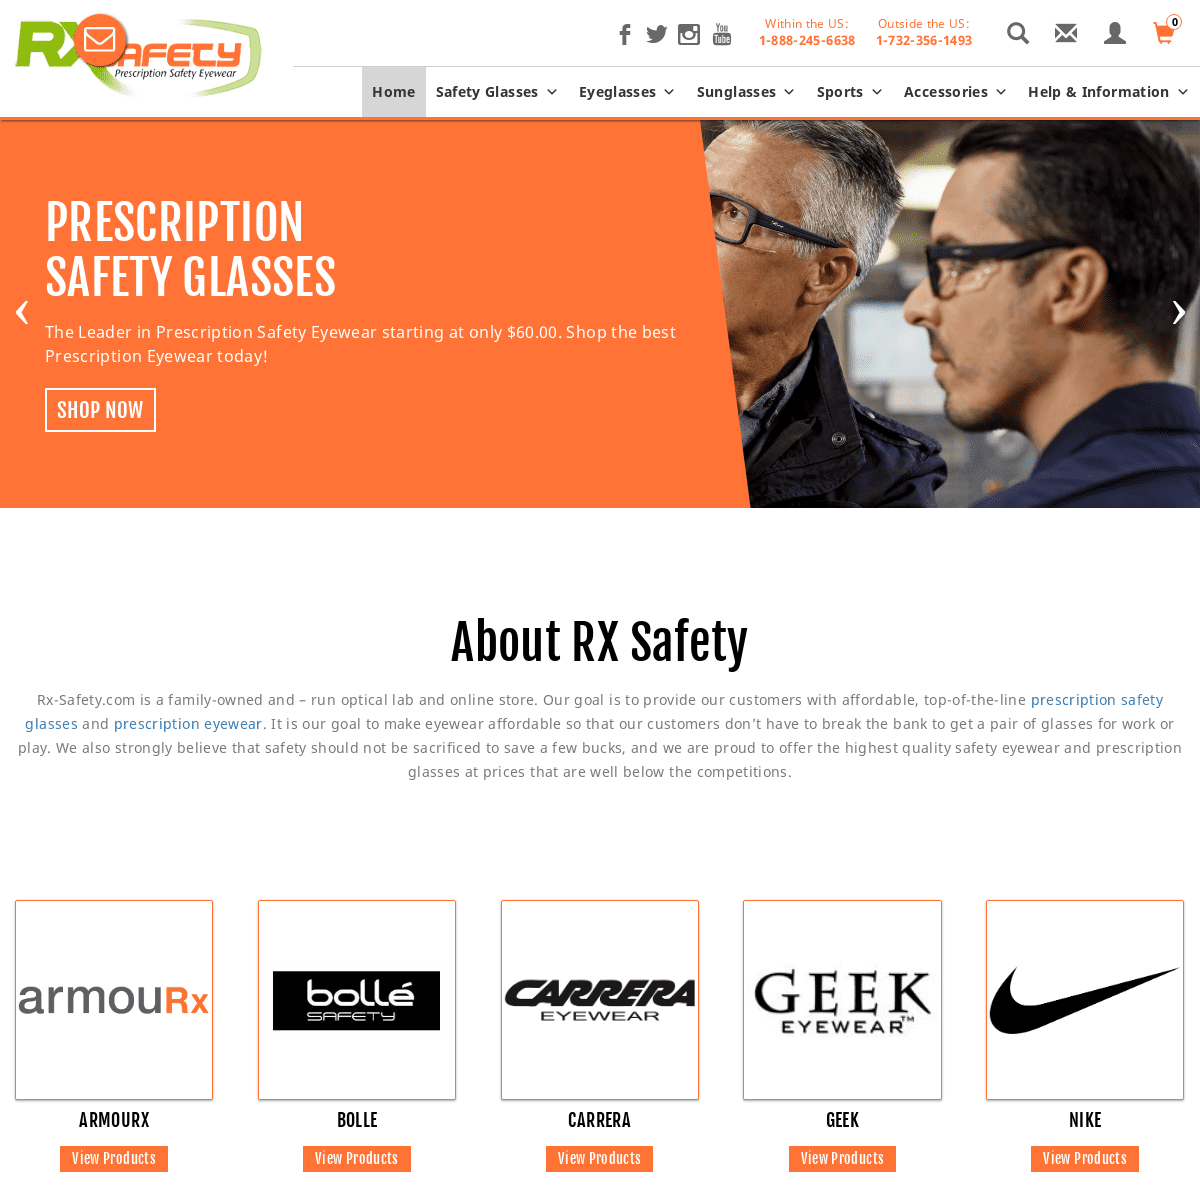 Prescription Safety Glasses and Eyewear - RX Safety